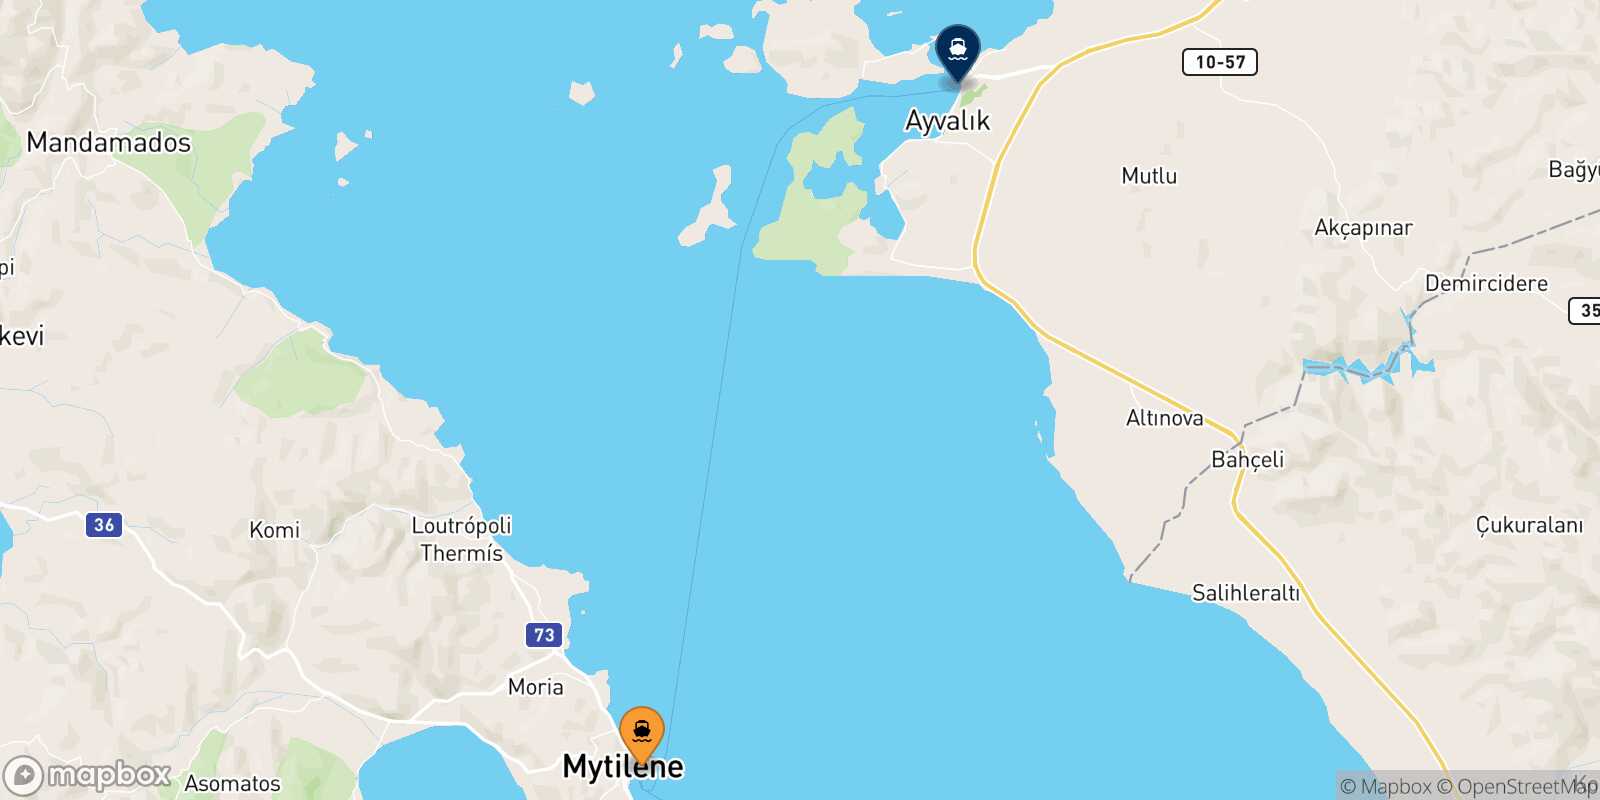 Mapa de la ruta Mytilene (Lesvos) Ayvalik